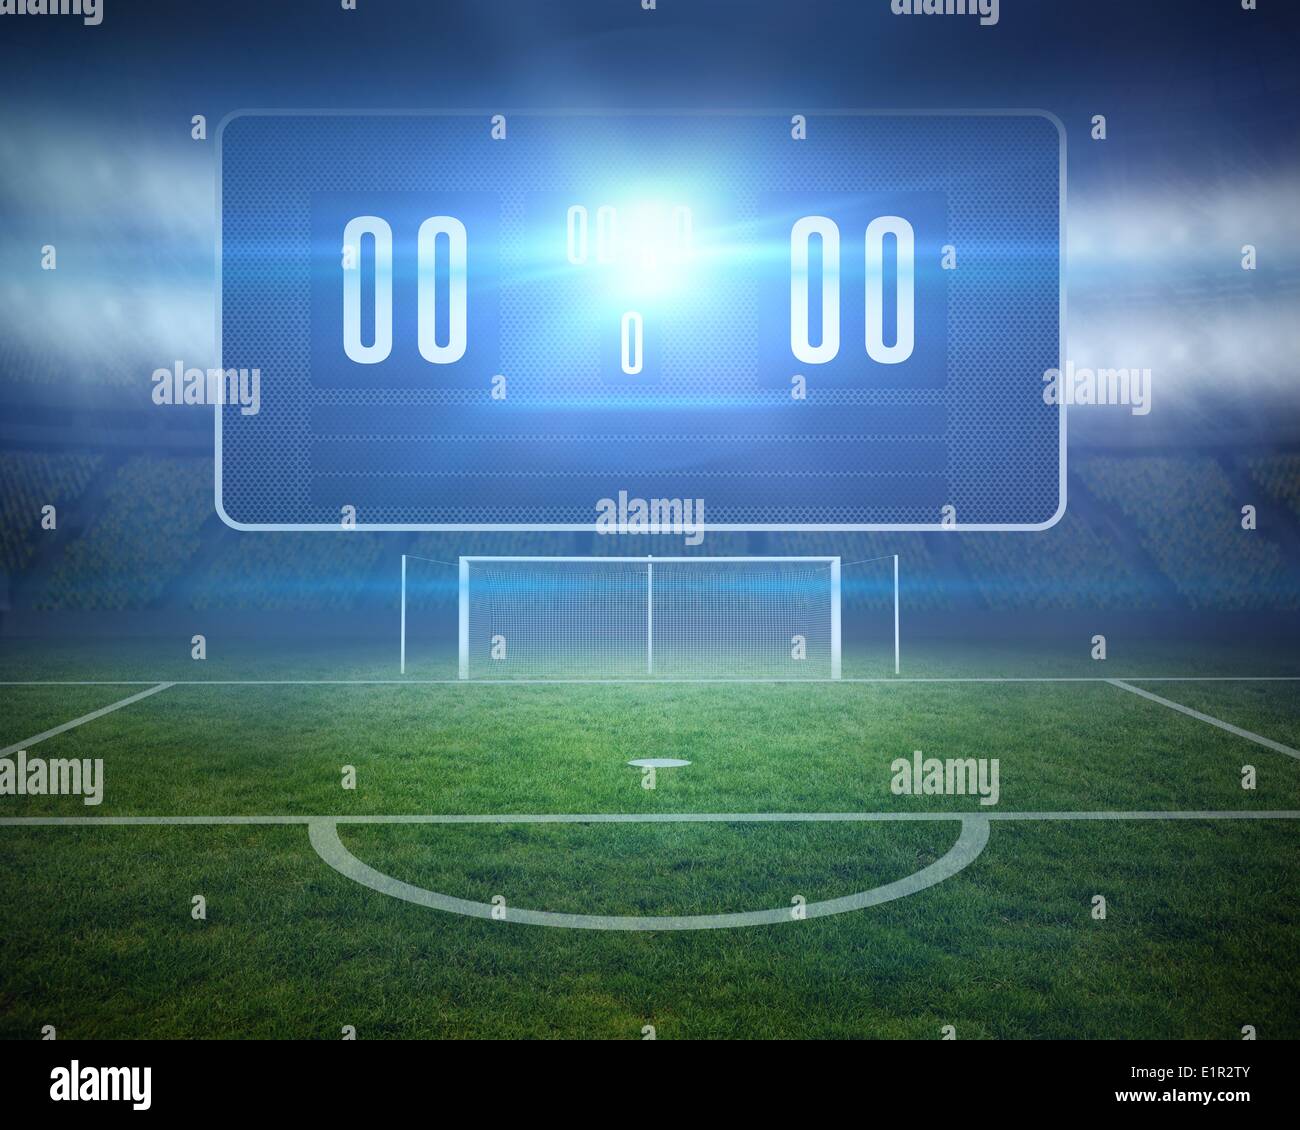 football-pitch-with-goalpost-and-scoreboard-stock-photo-alamy